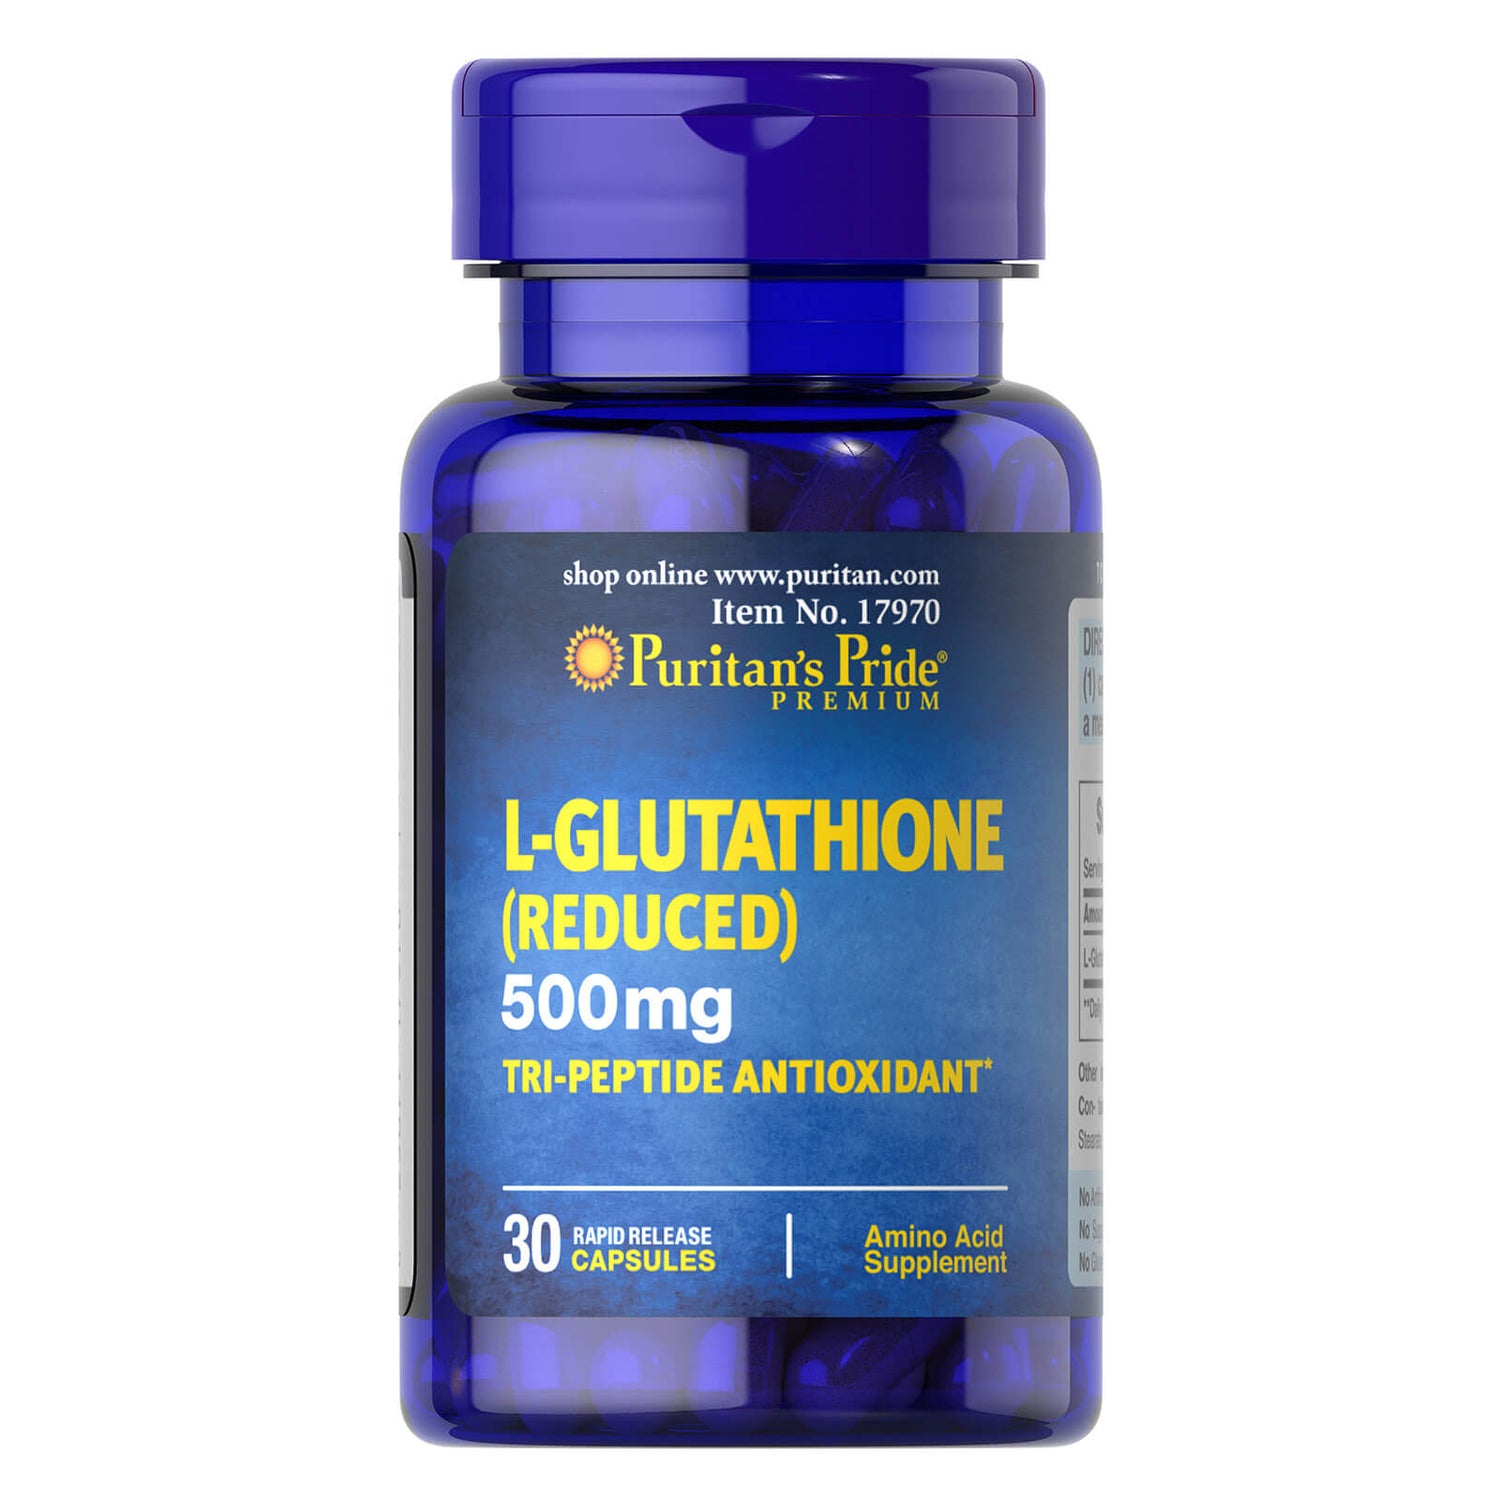 Puritan's Pride L-Glutathione 500mg - 30 Tablets